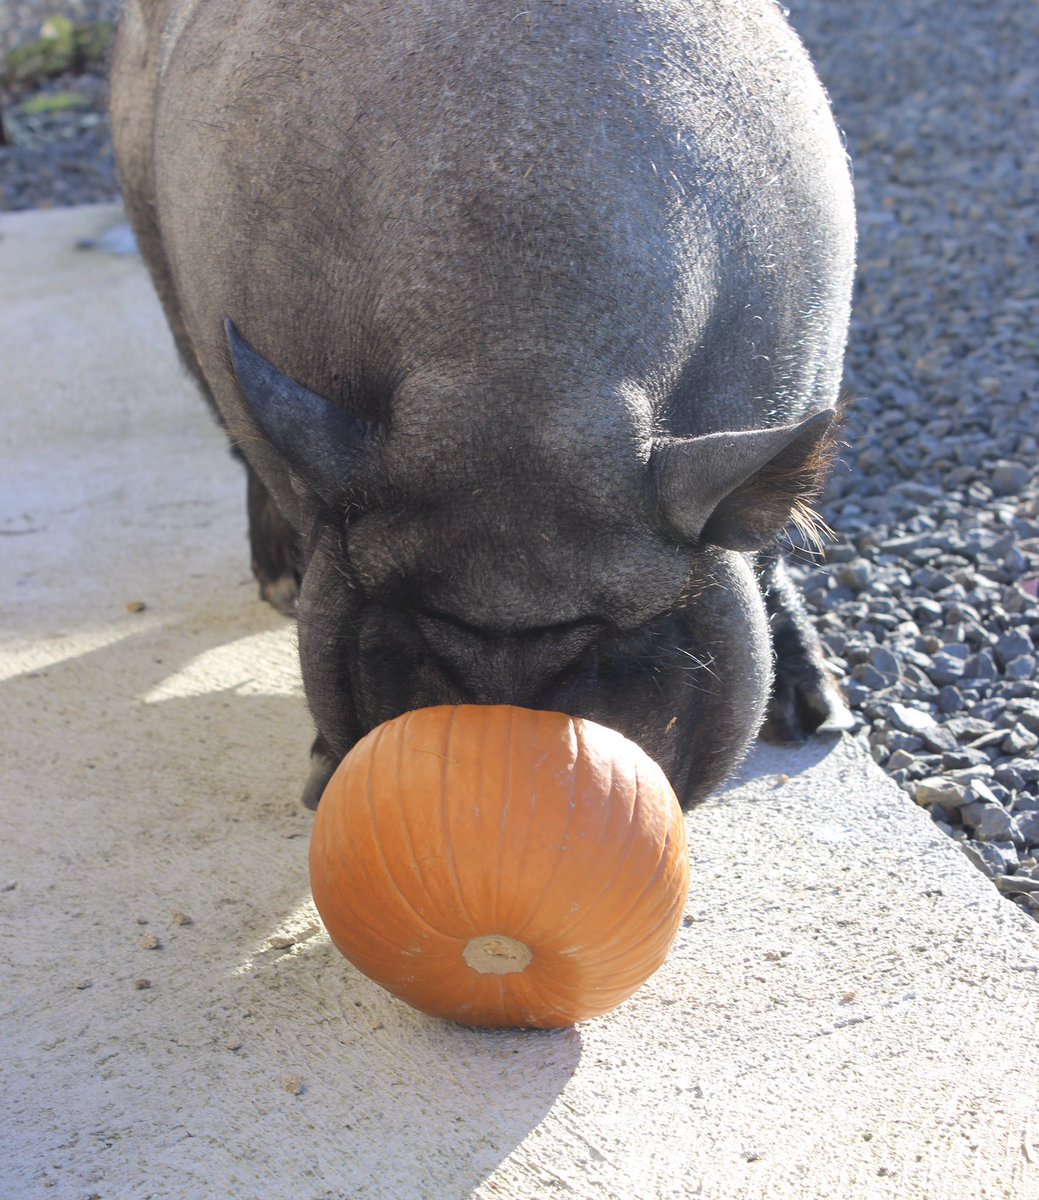 Pumpkin smells goooooooood! 
#pig #pumpkin #delicious #treattime #orlapig #orkney #farmlife #autumntreats #scottishfarm #nomnom